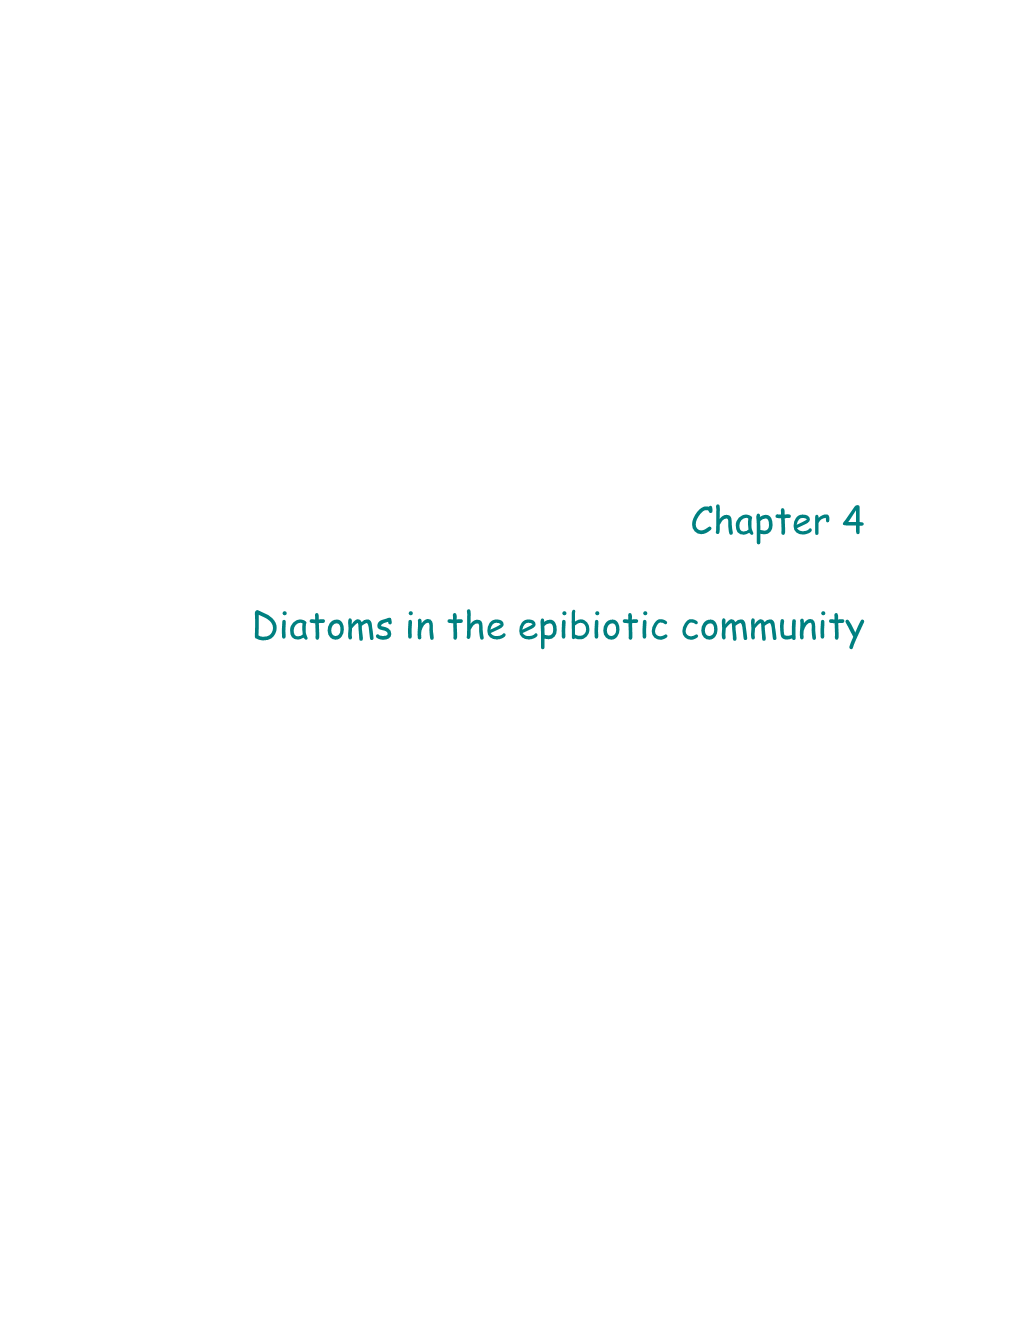 Chapter 4 Diatoms in the Epibiotic Community